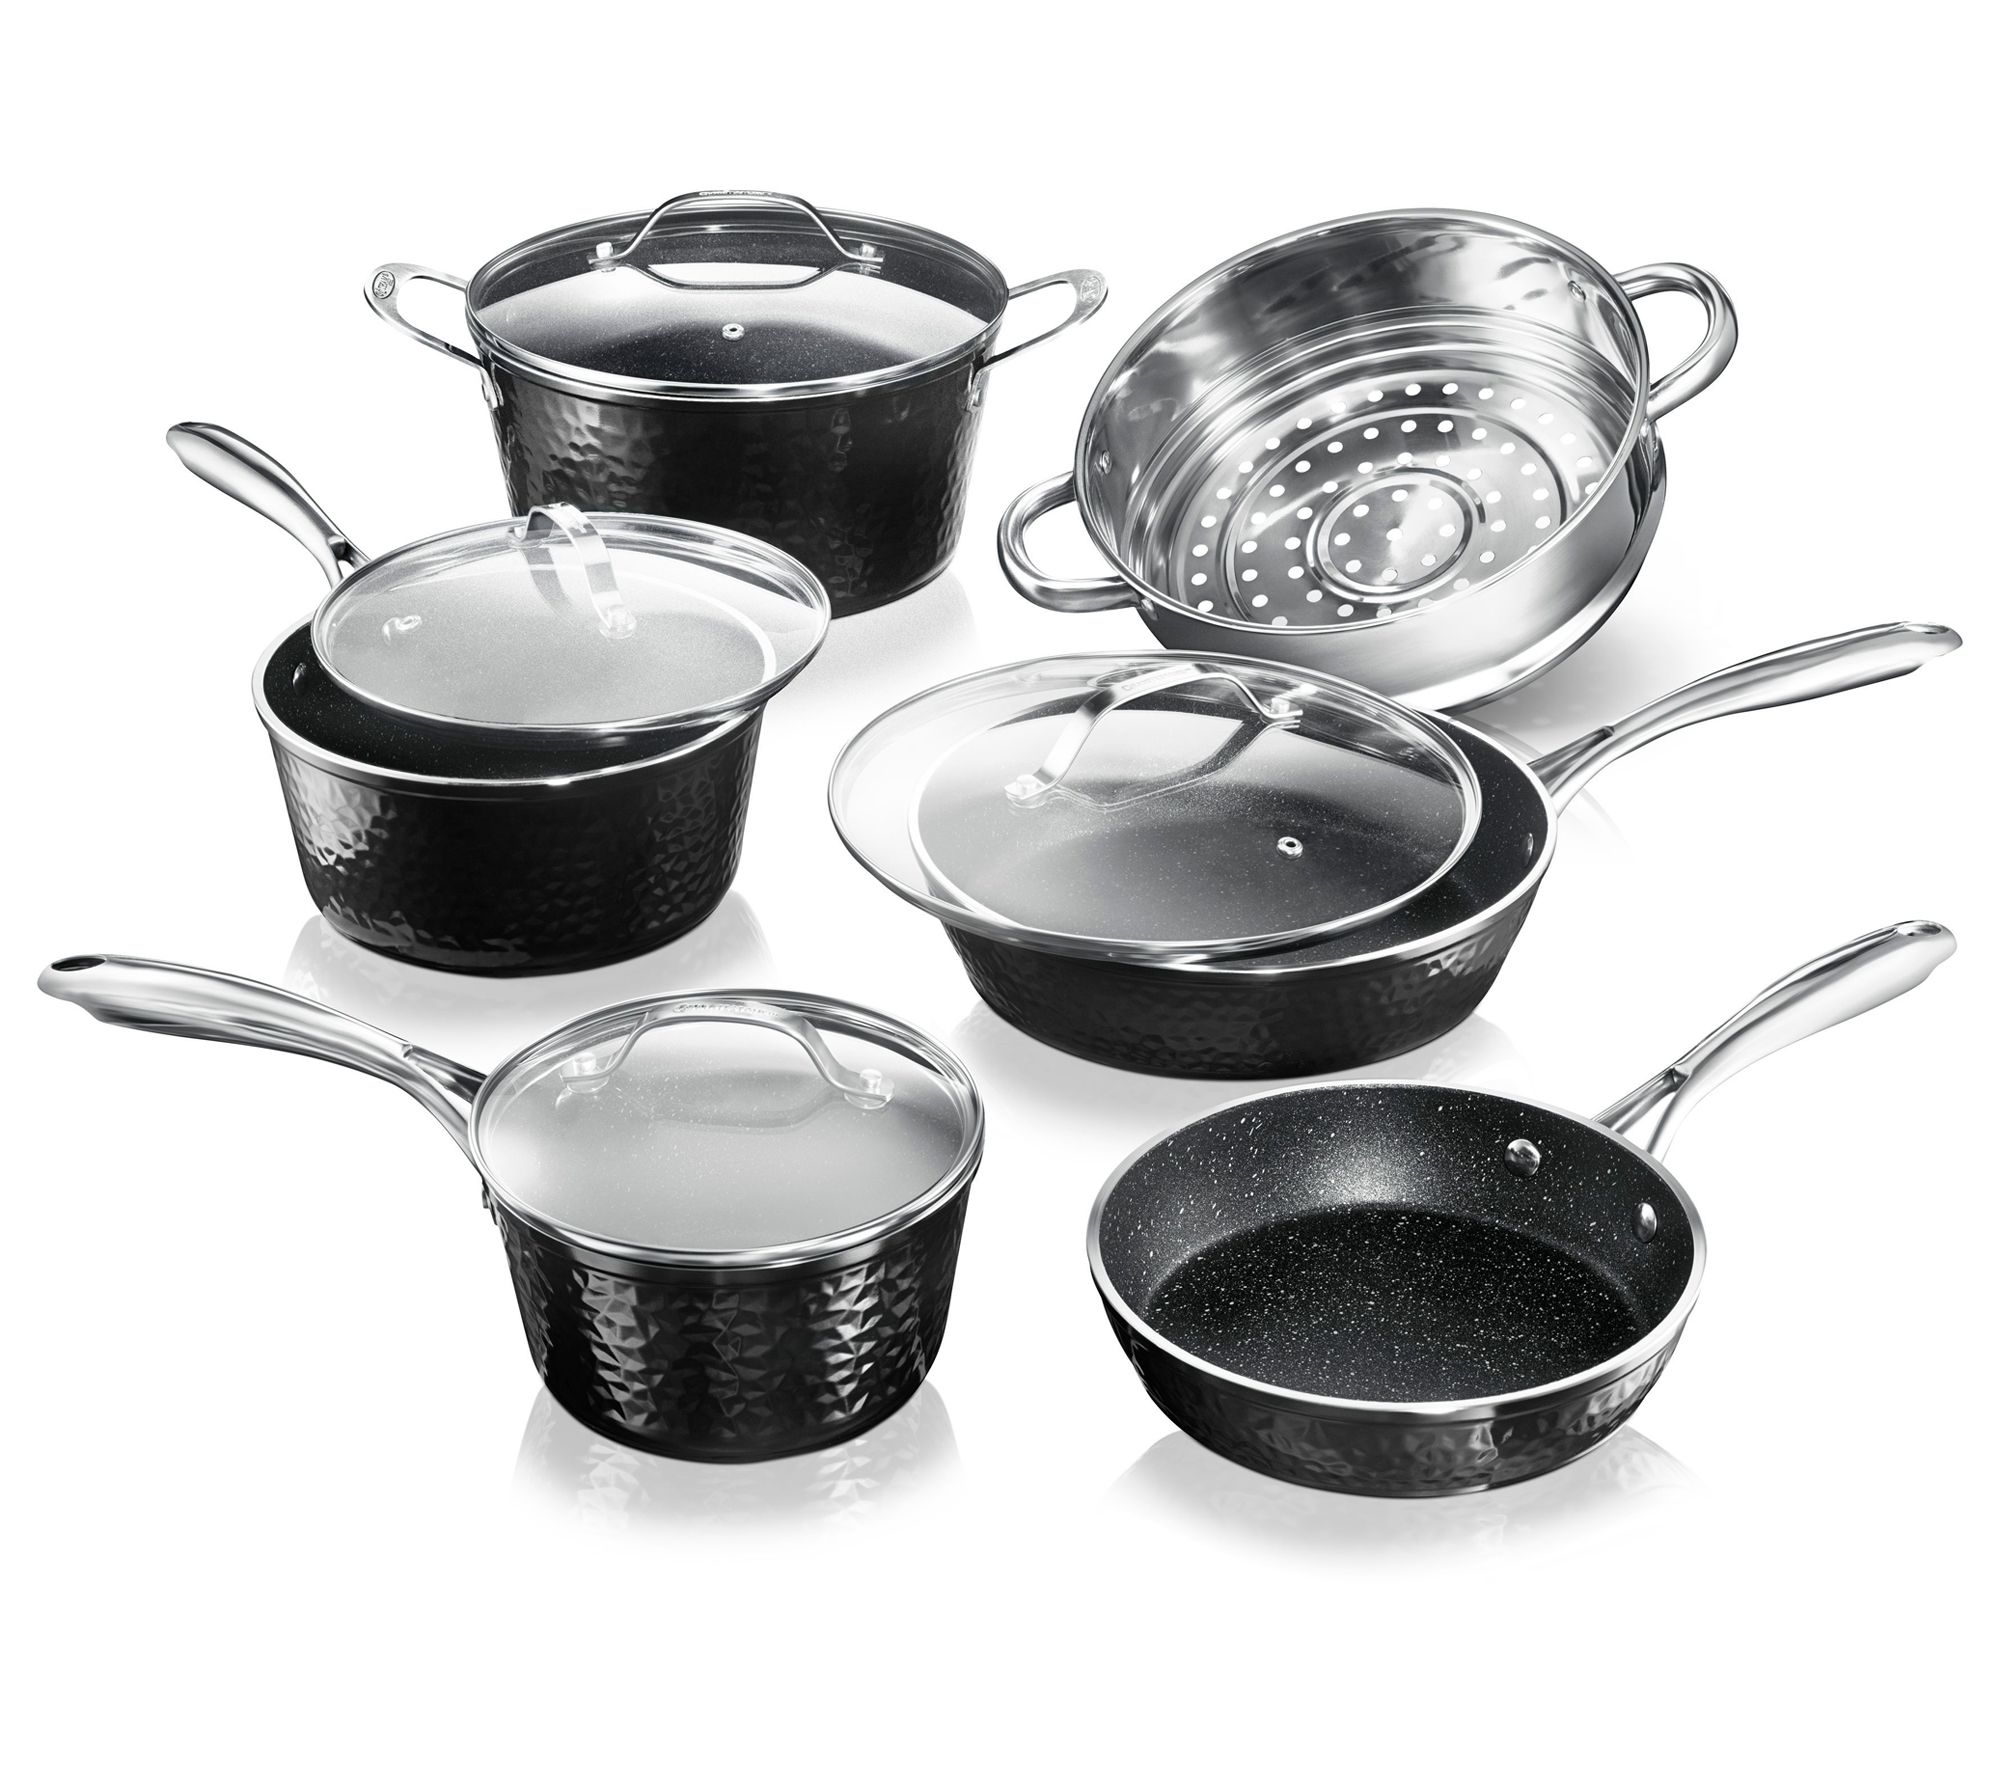 Granite Stone Pots and Pans Set, 10 Piece Complete Cookware Set, Nonstick,  Dishwasher Safe, Blue